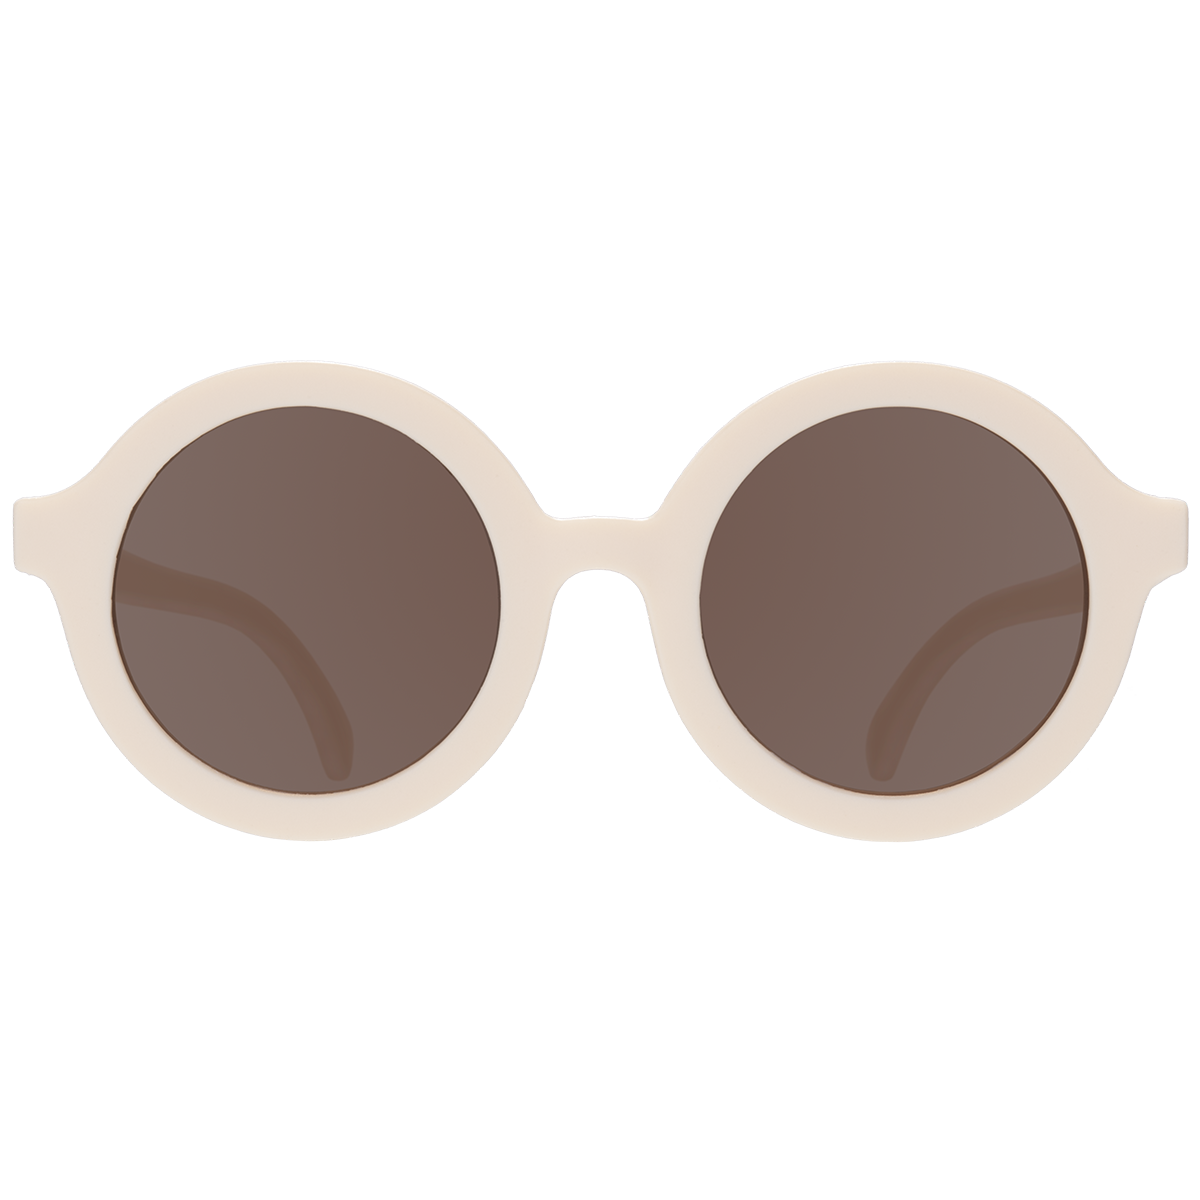 Euro Round Sweet Cream Sunglasses with Amber lens